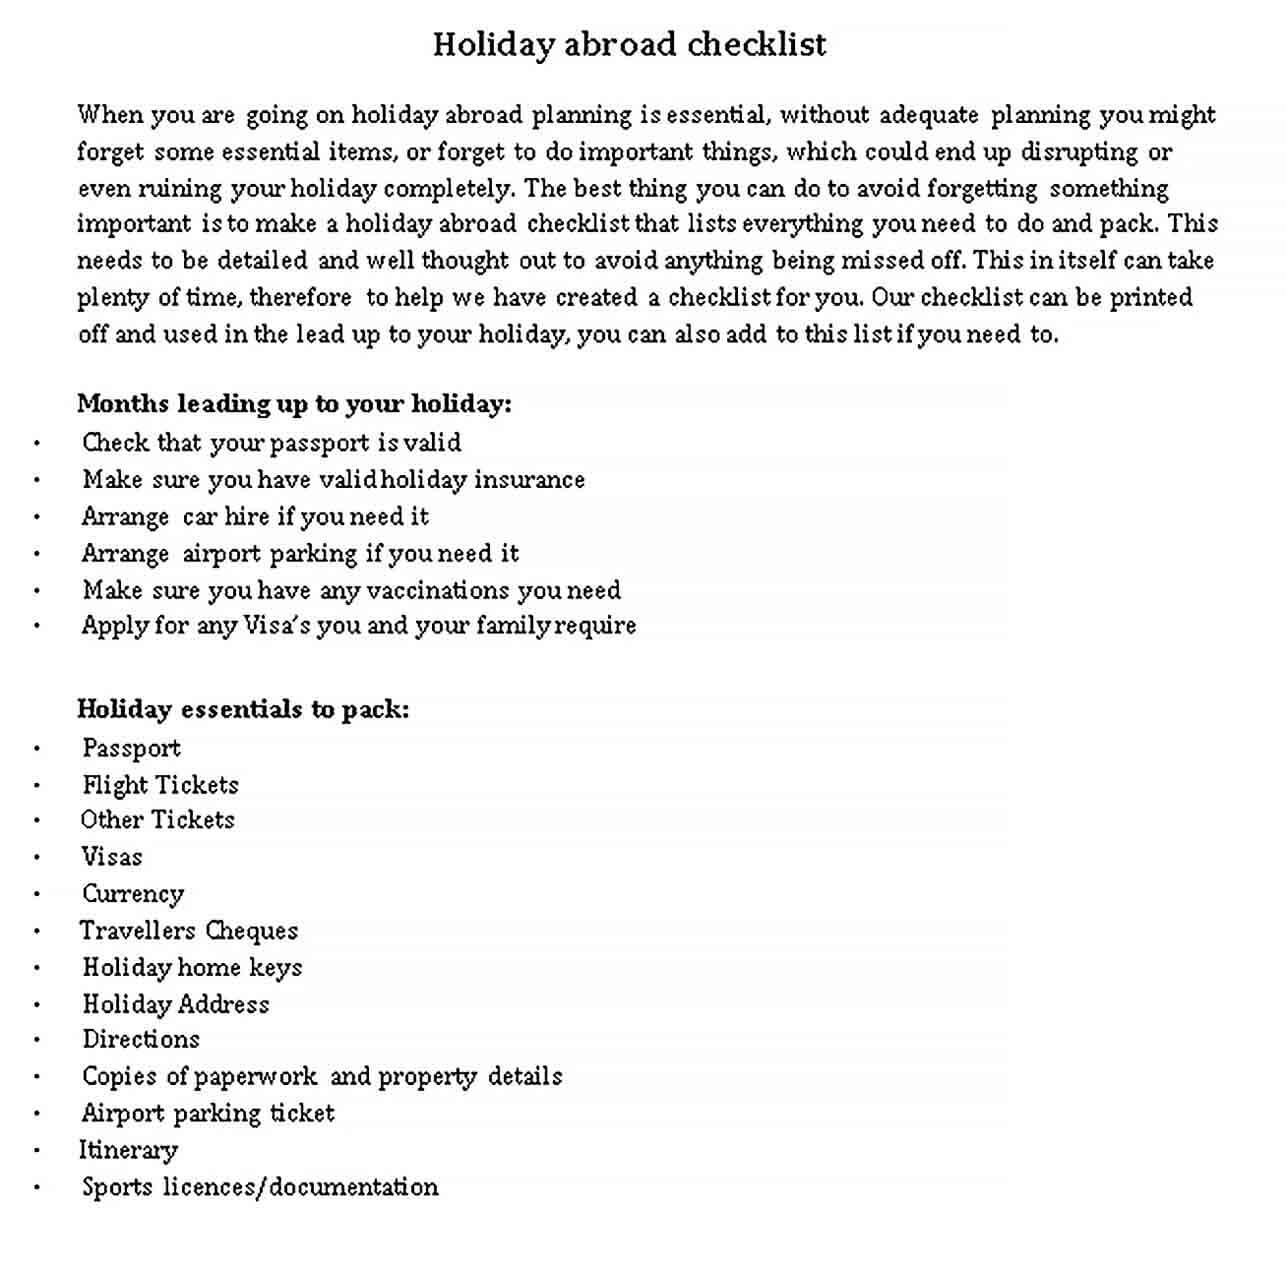 Sample Holiday Abroad Checklist